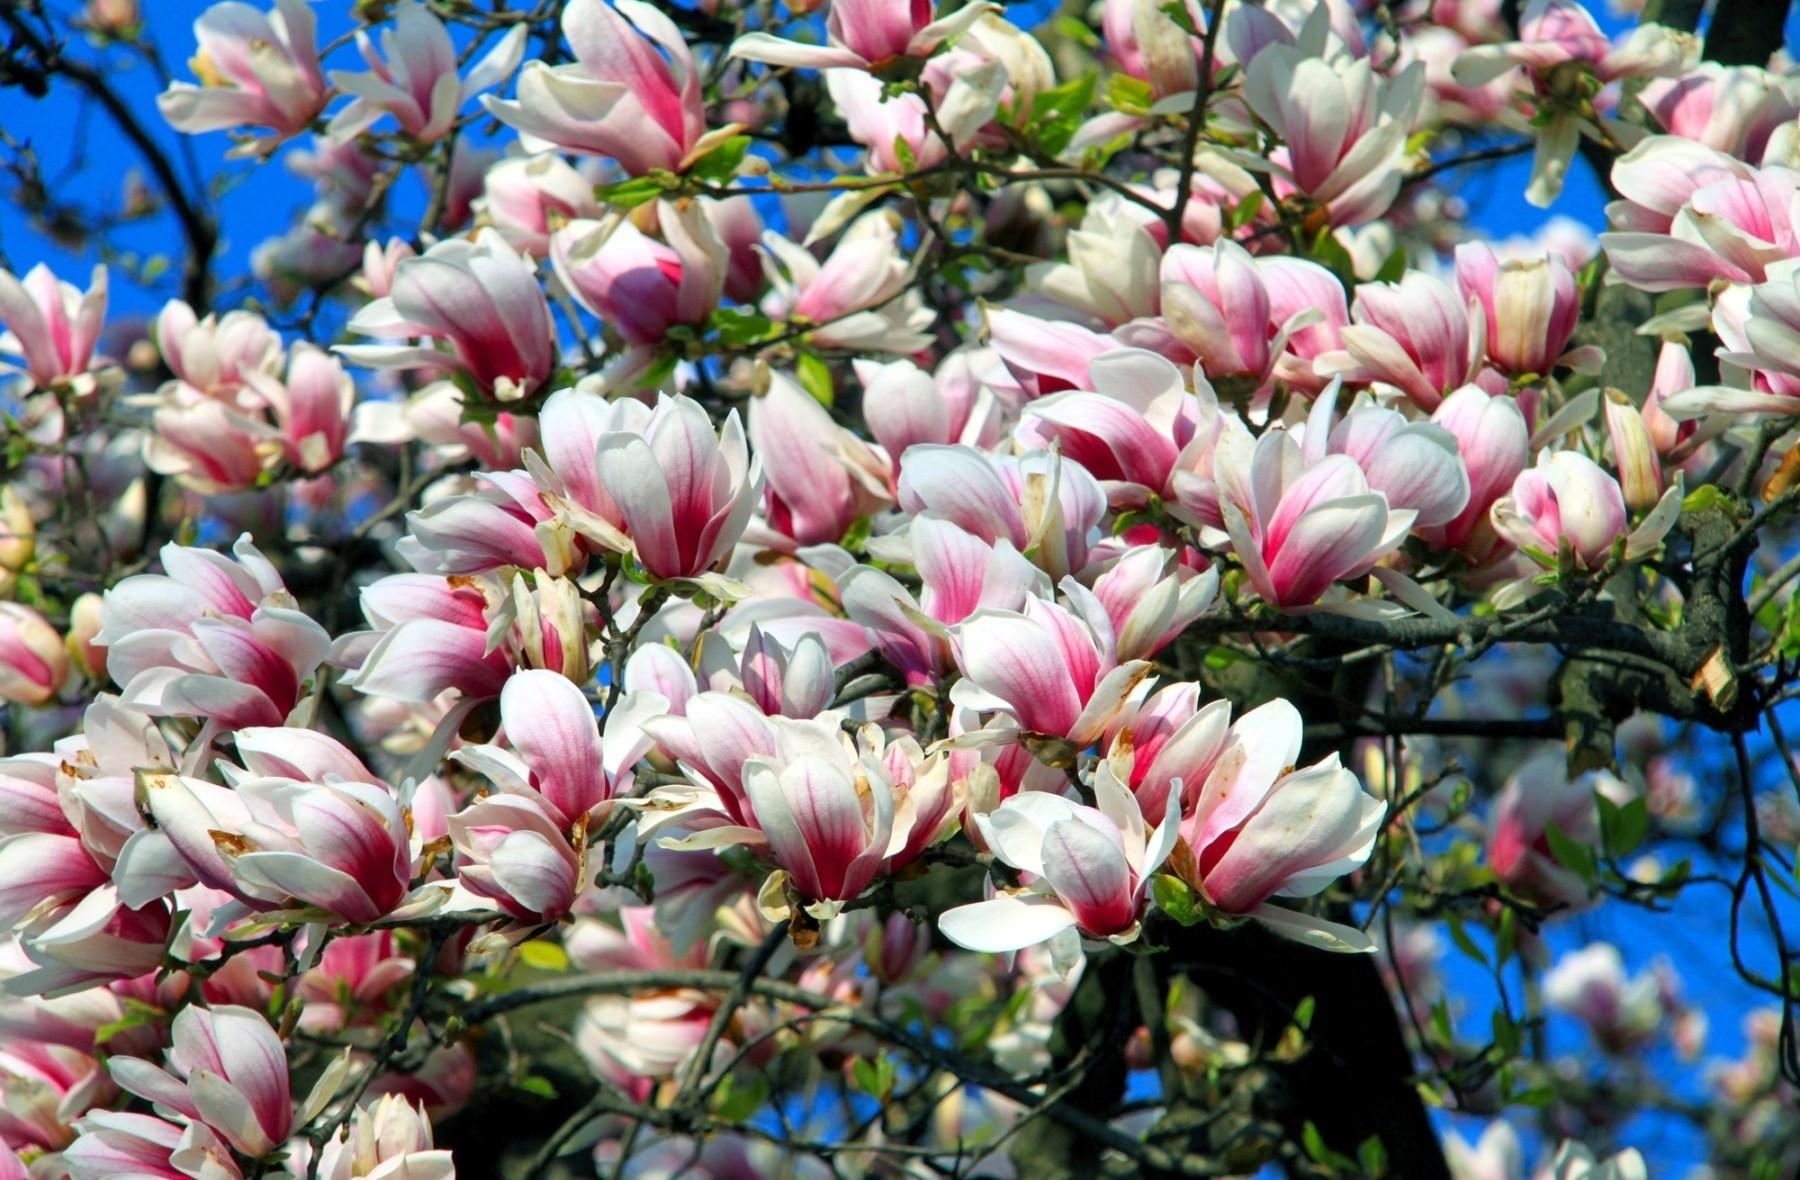 Download wallpaper 1800x1180 magnolia, blossoms, branch, sky